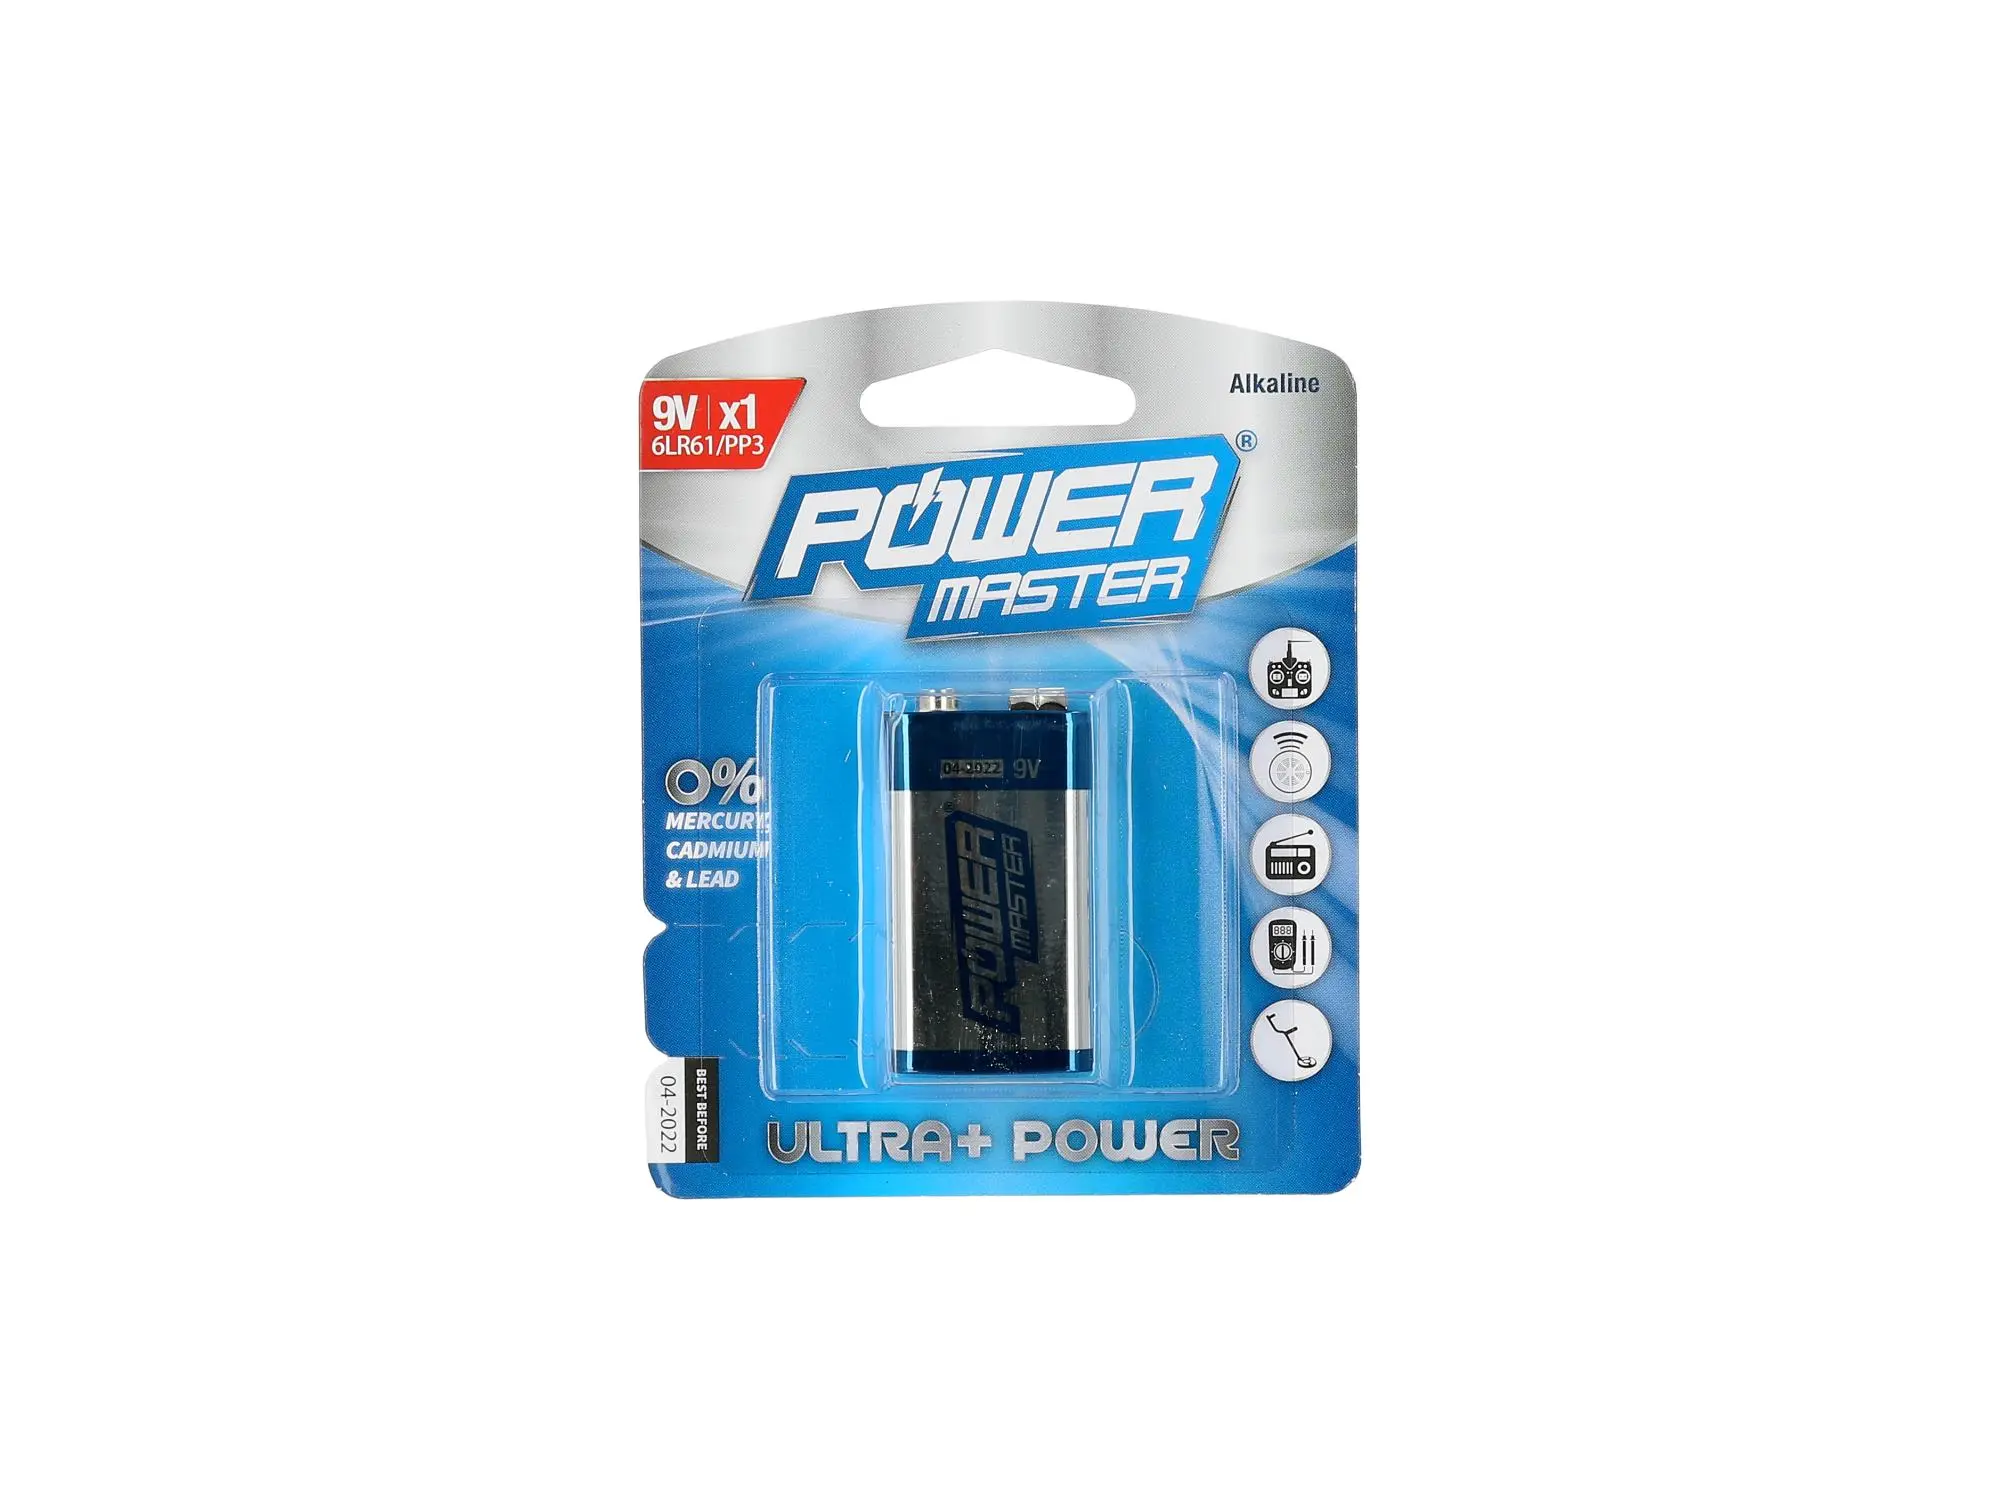 Power Master Alkali-Batterie 6LR61 - 9Volt Block, Art.-Nr.: 10068797 - Bild 1